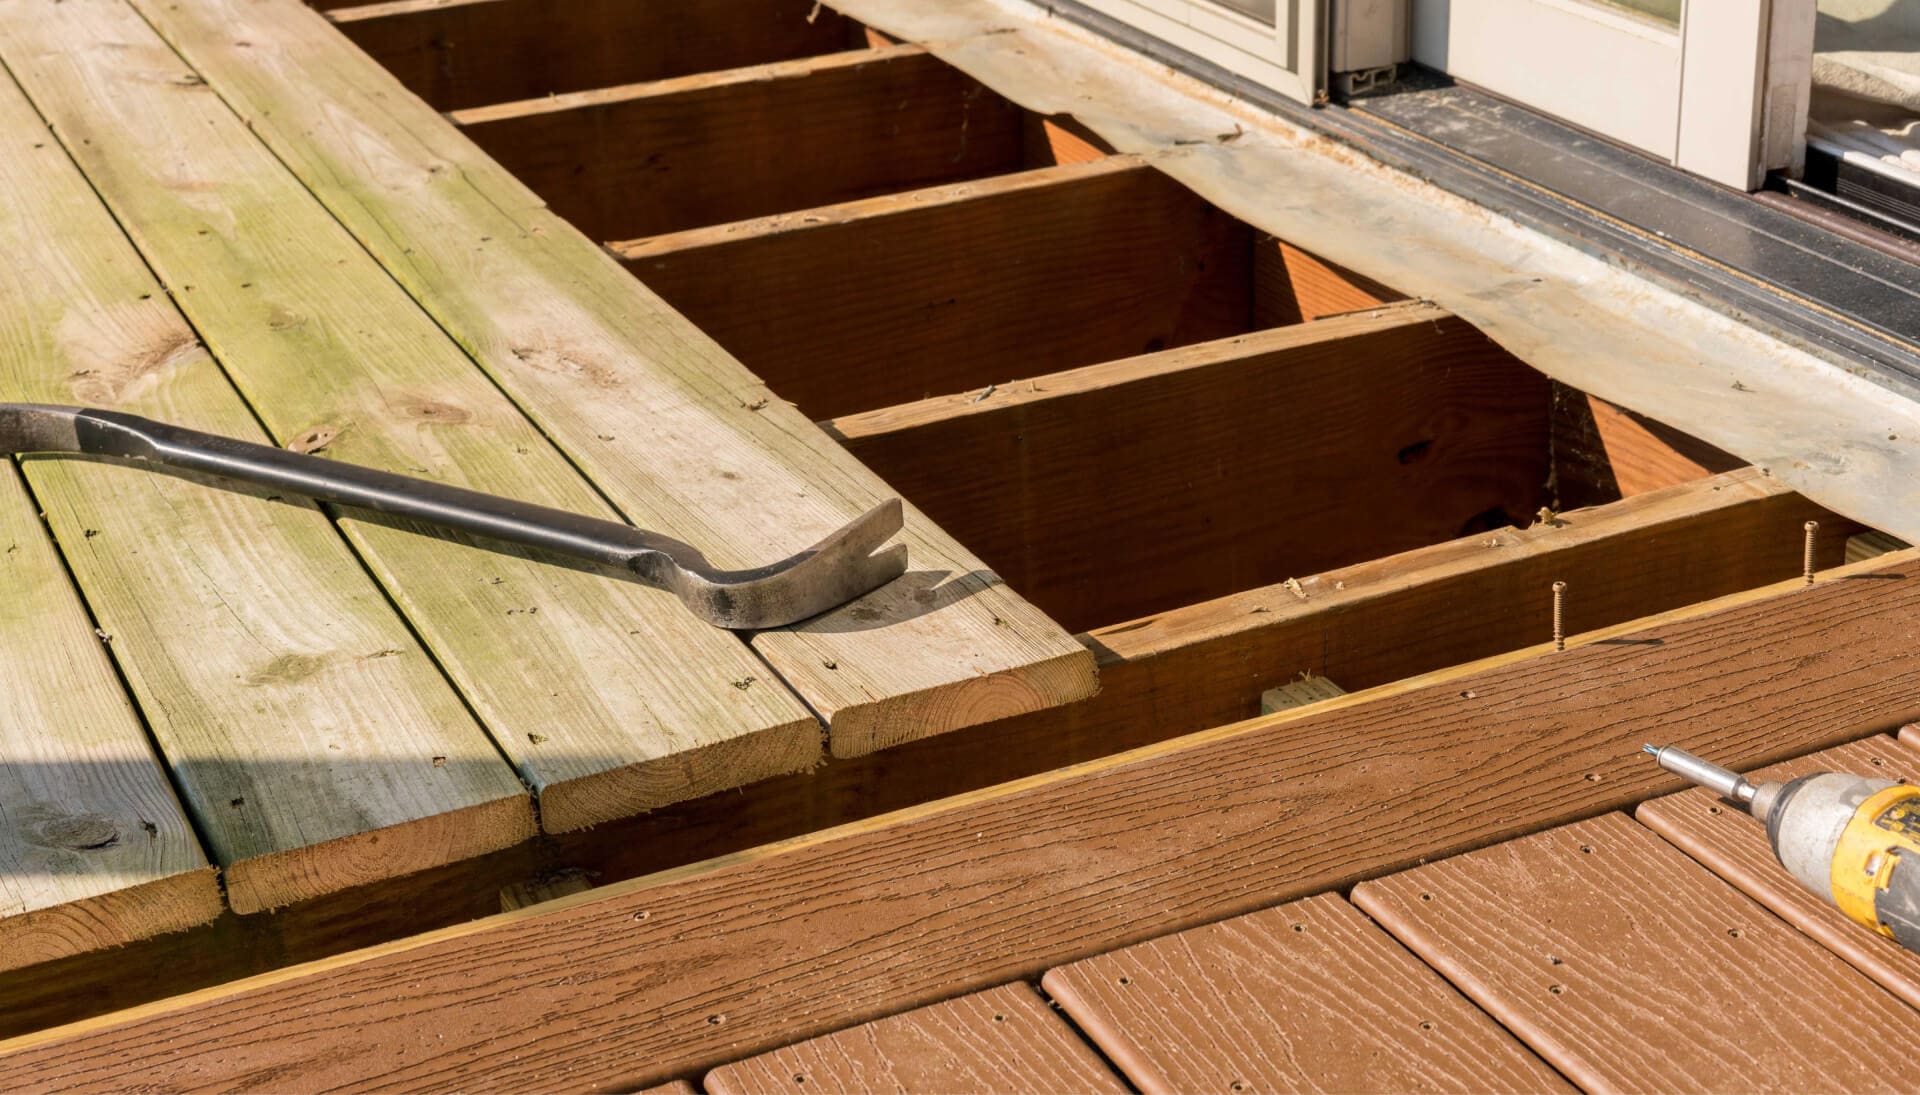 We offer the best deck repair services in Vero Beach, Florida